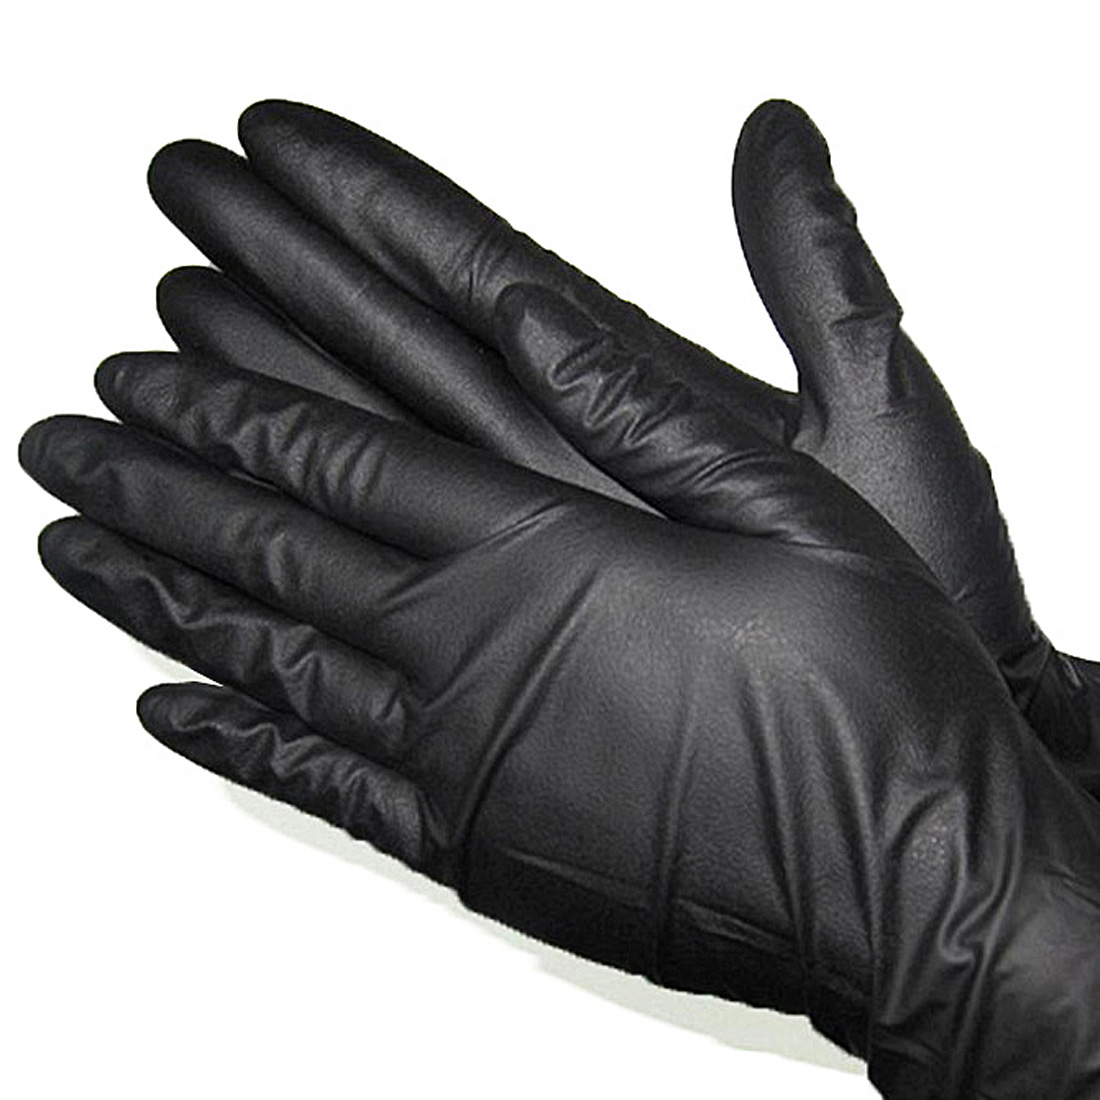 Gloves Black Nitrile Powder Free Large 5-6mil 10/100ct GPNB - Sold by EA